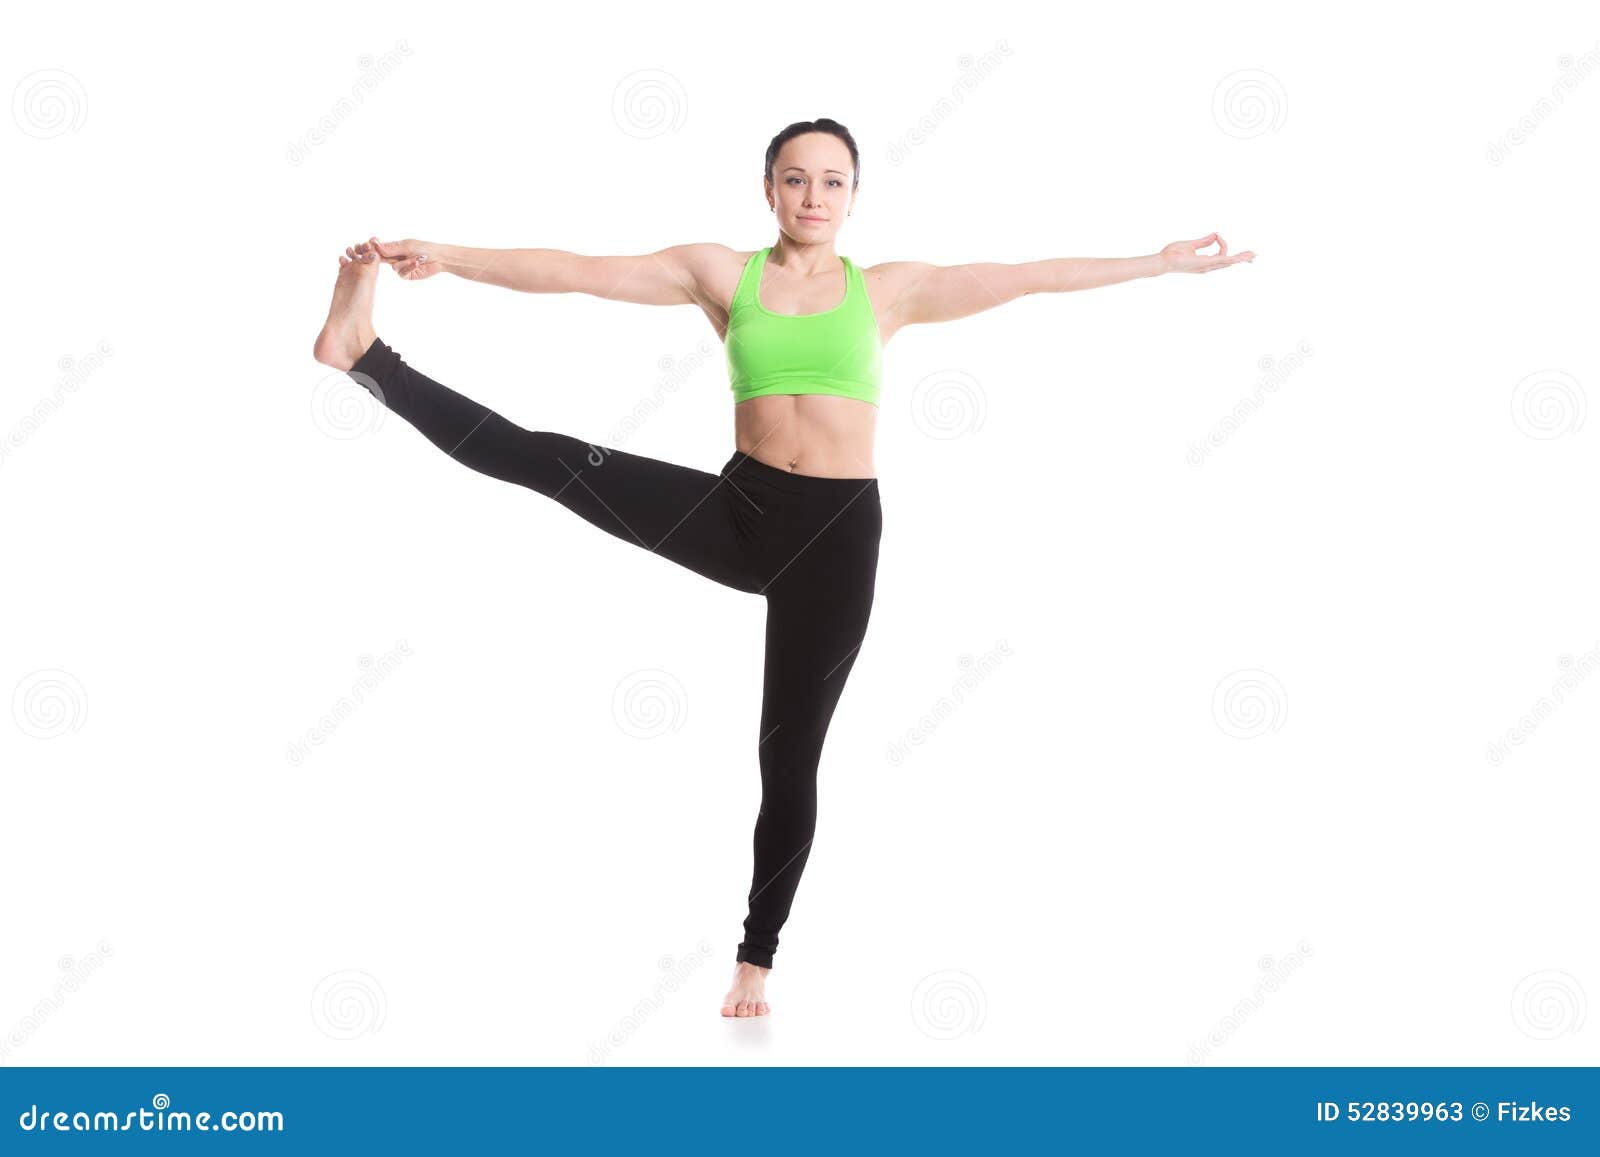 utthita hasta padangustasana yoga pose